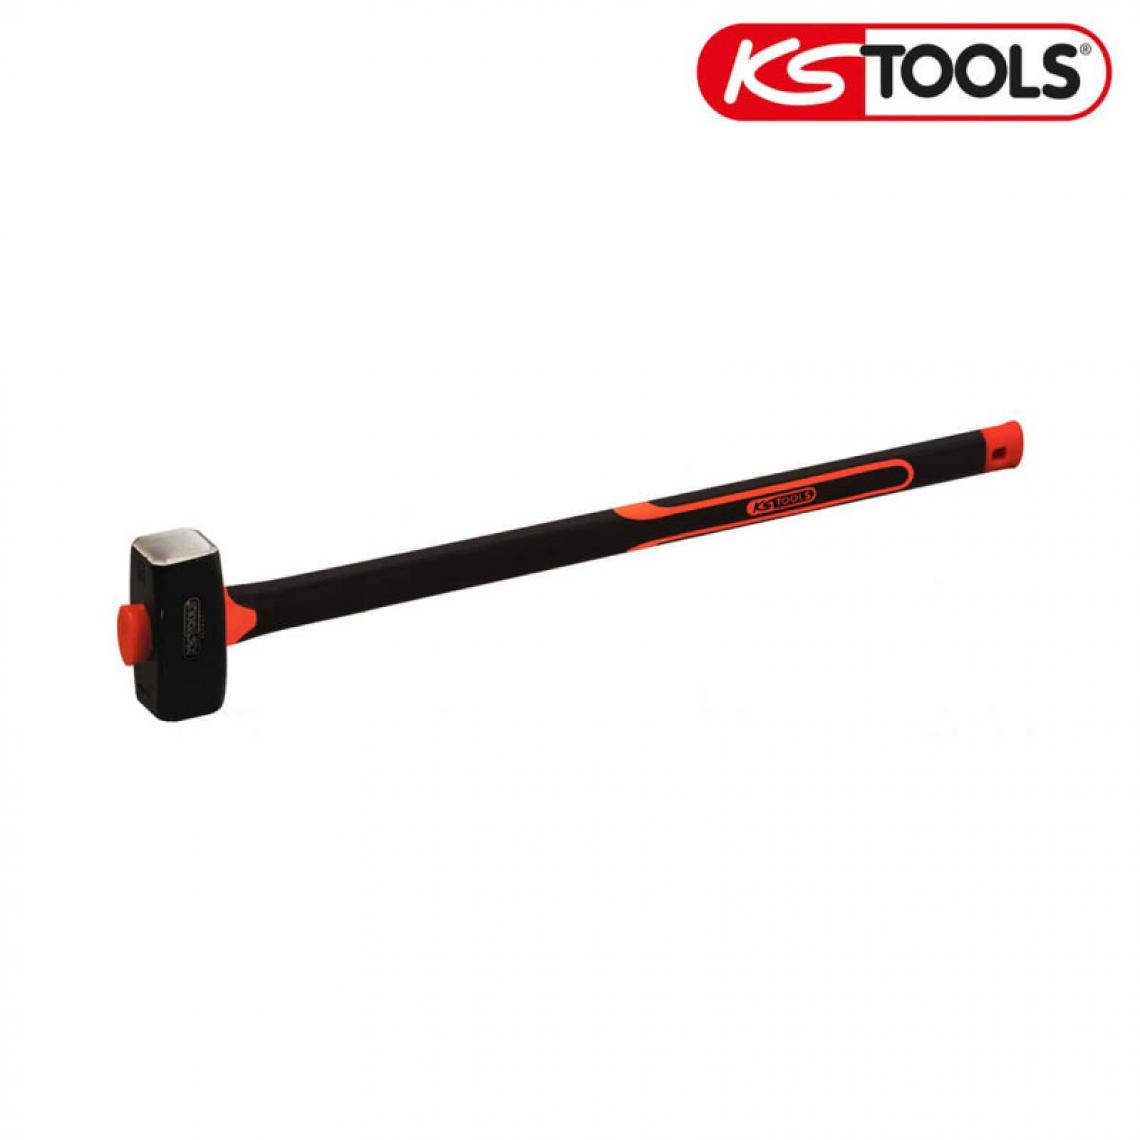 Ks Tools - Masse couple KS TOOLS - 5800 g - 142.6501 - Clés et douilles